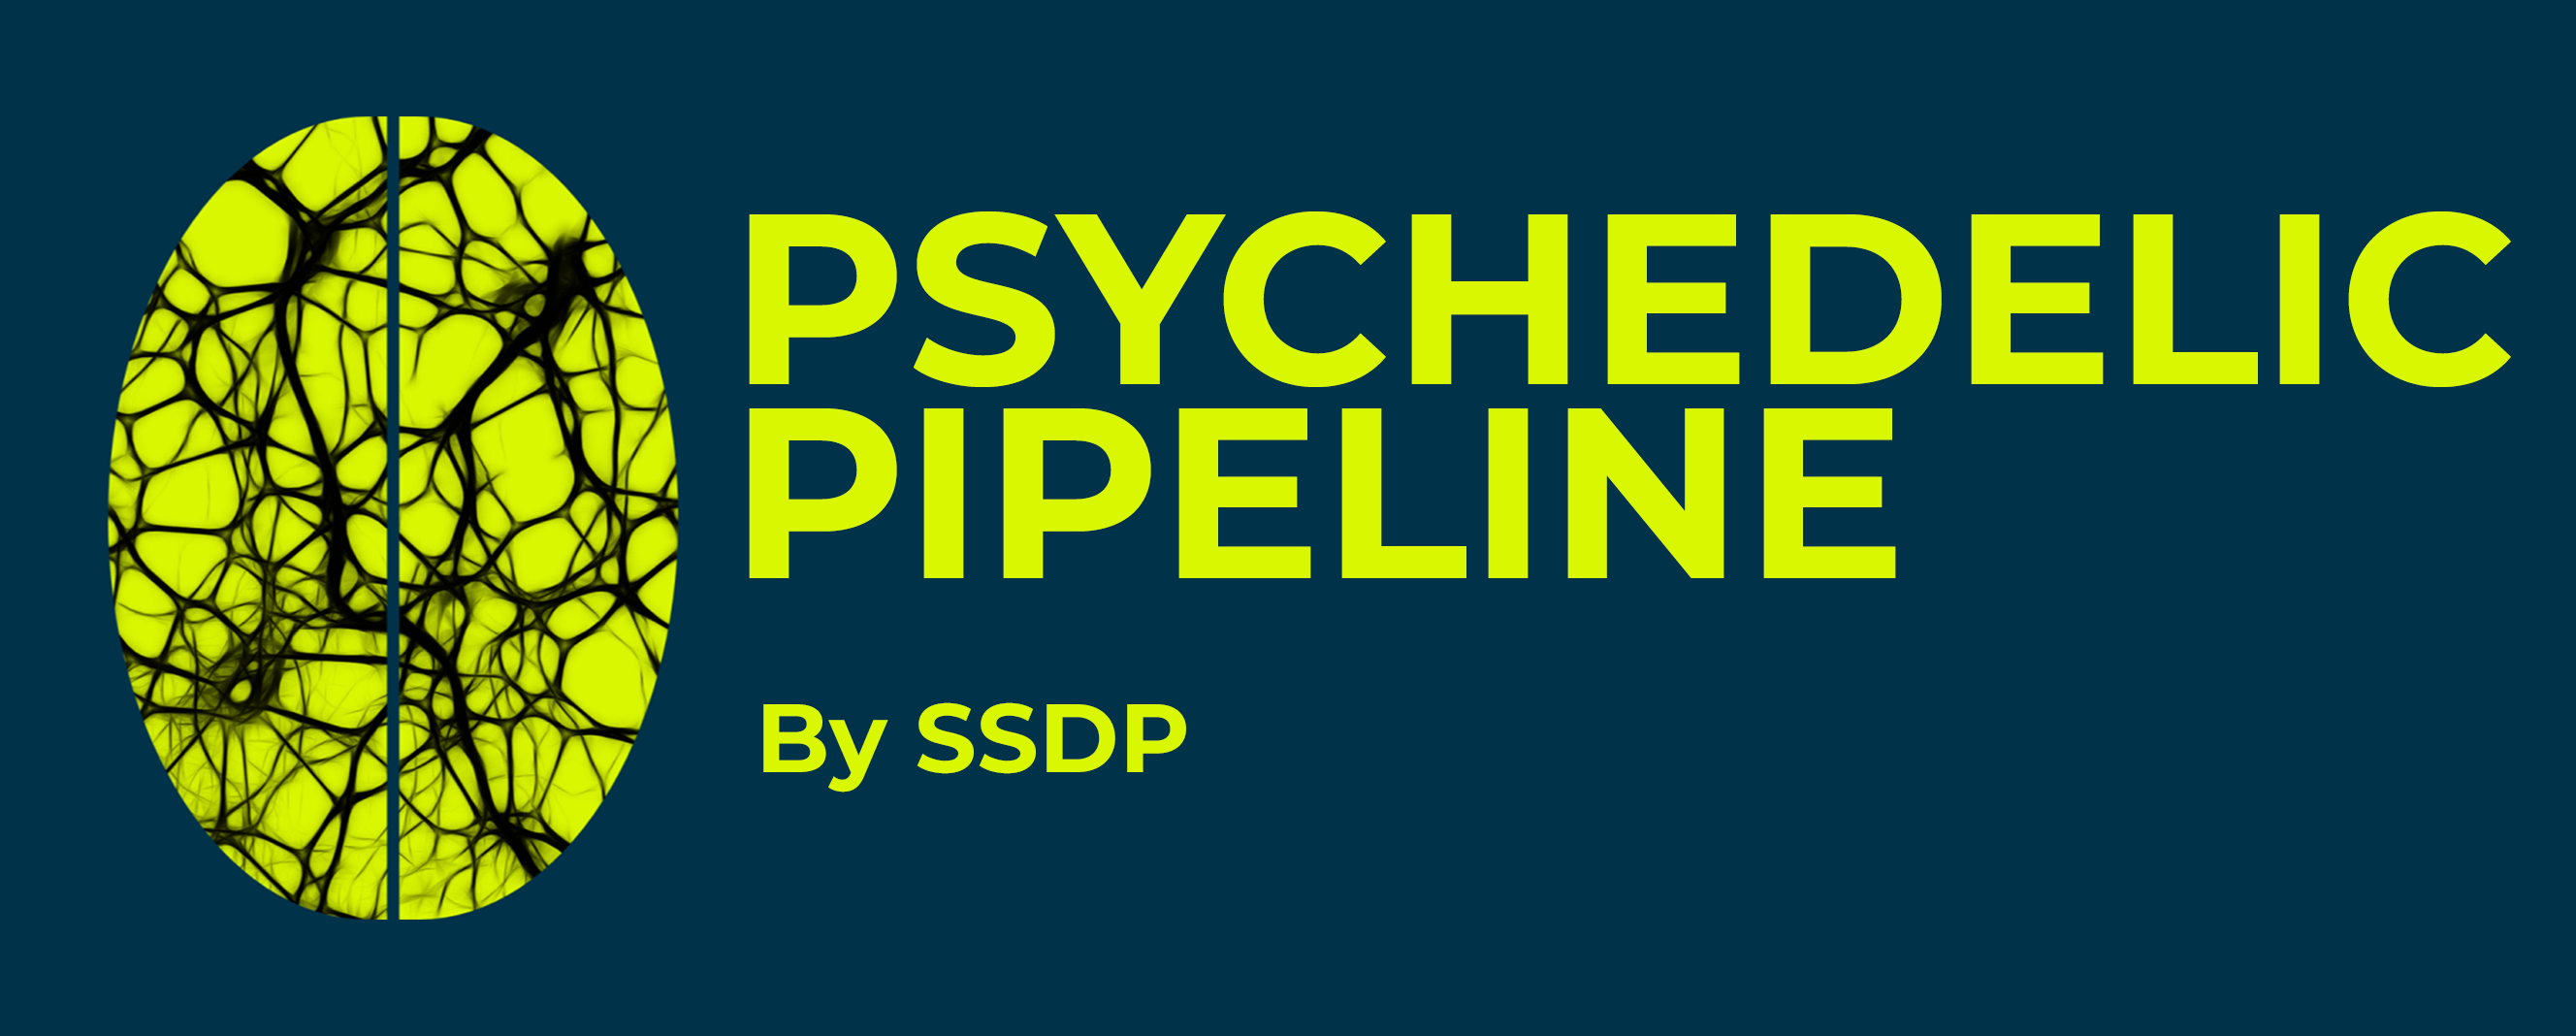 SSDP Psychedelic Pipeline logo 